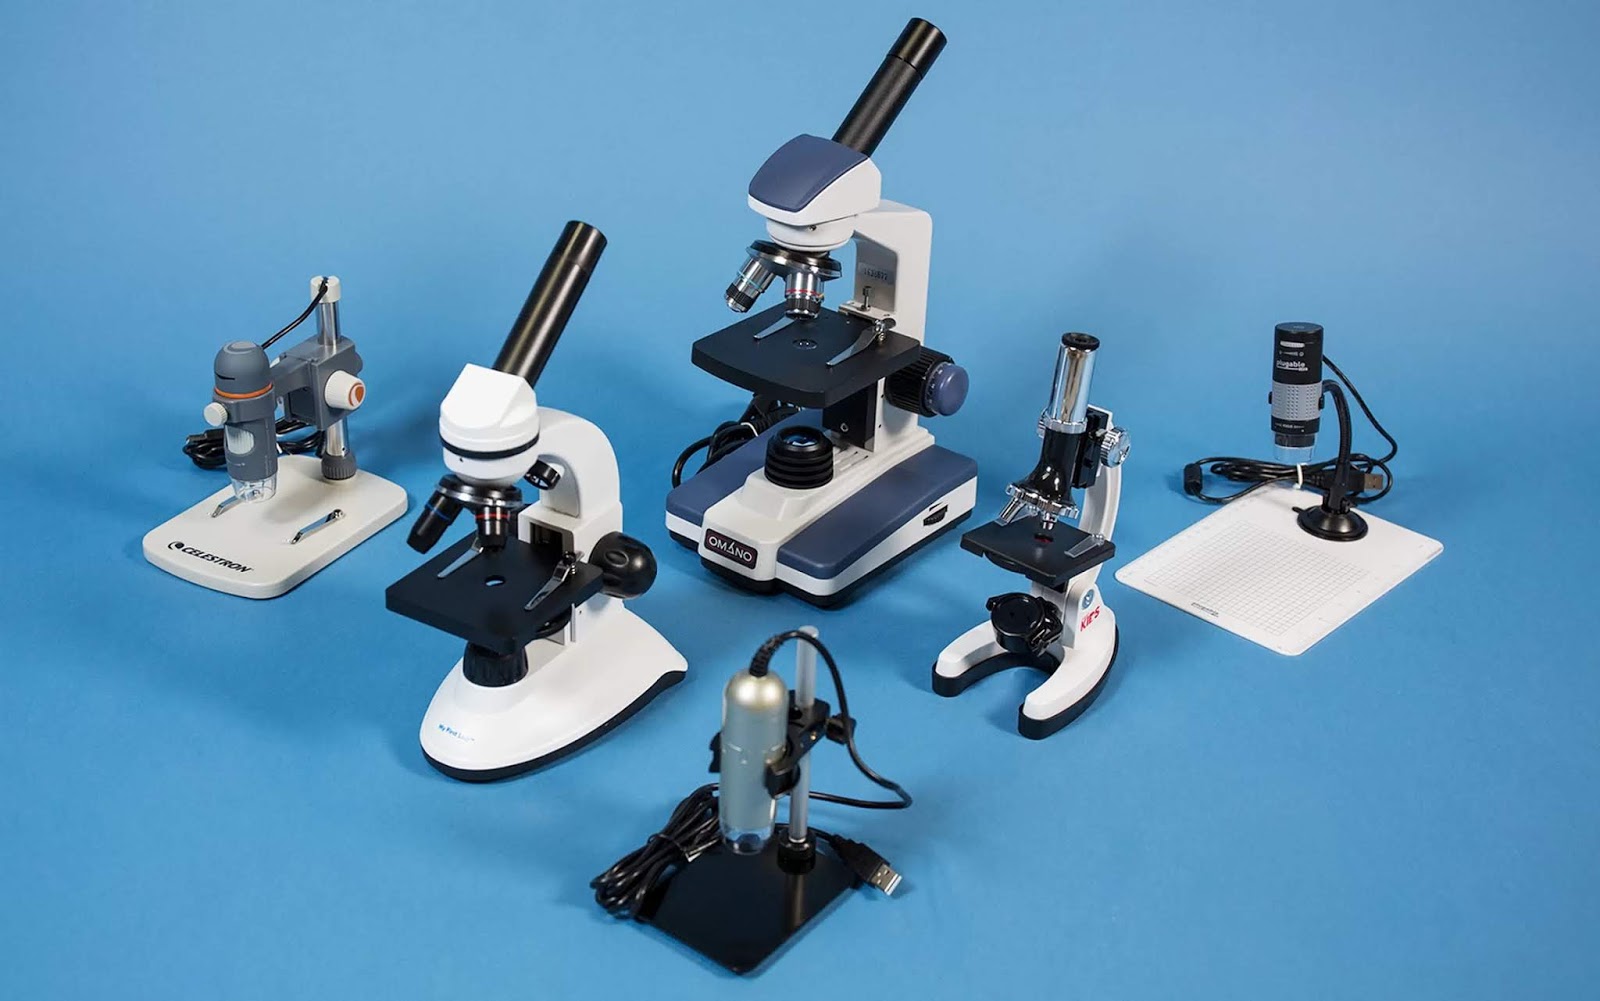 1 прибор типа микроскопа. Микроскоп Starlite. Современный оптический микроскоп. Микроскоп для дошкольников.